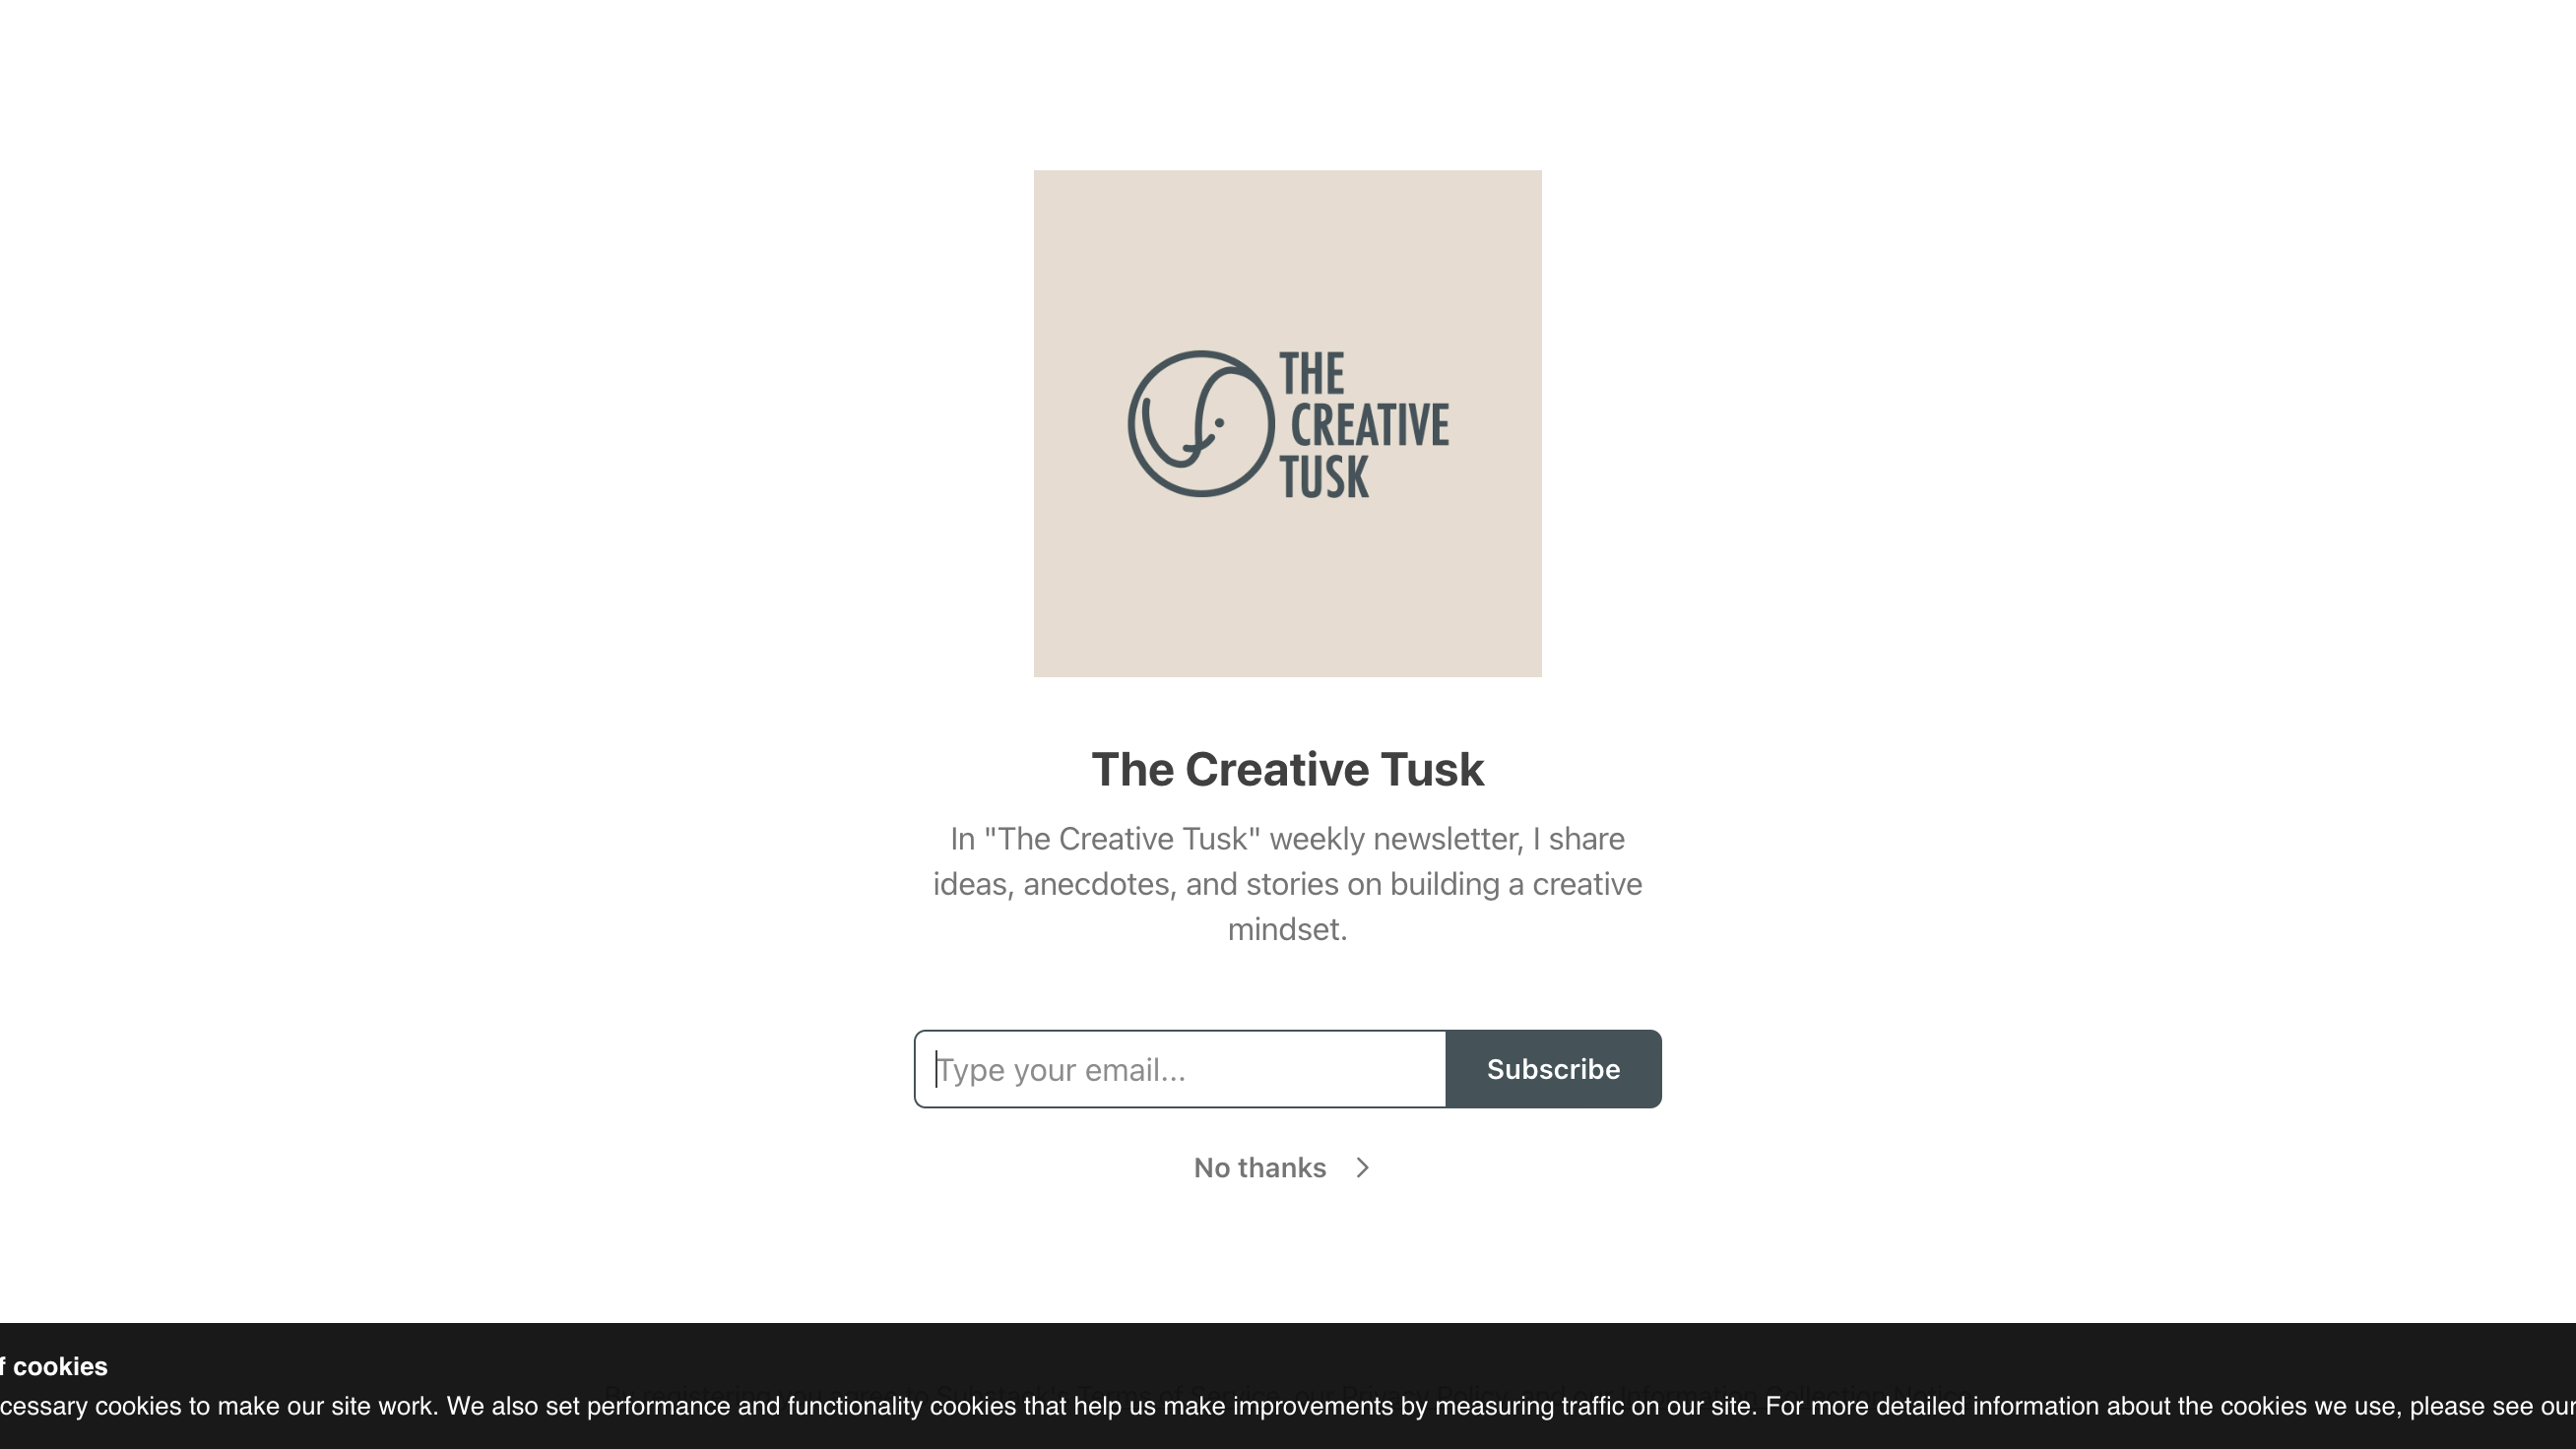 The Creative Tusk homepage